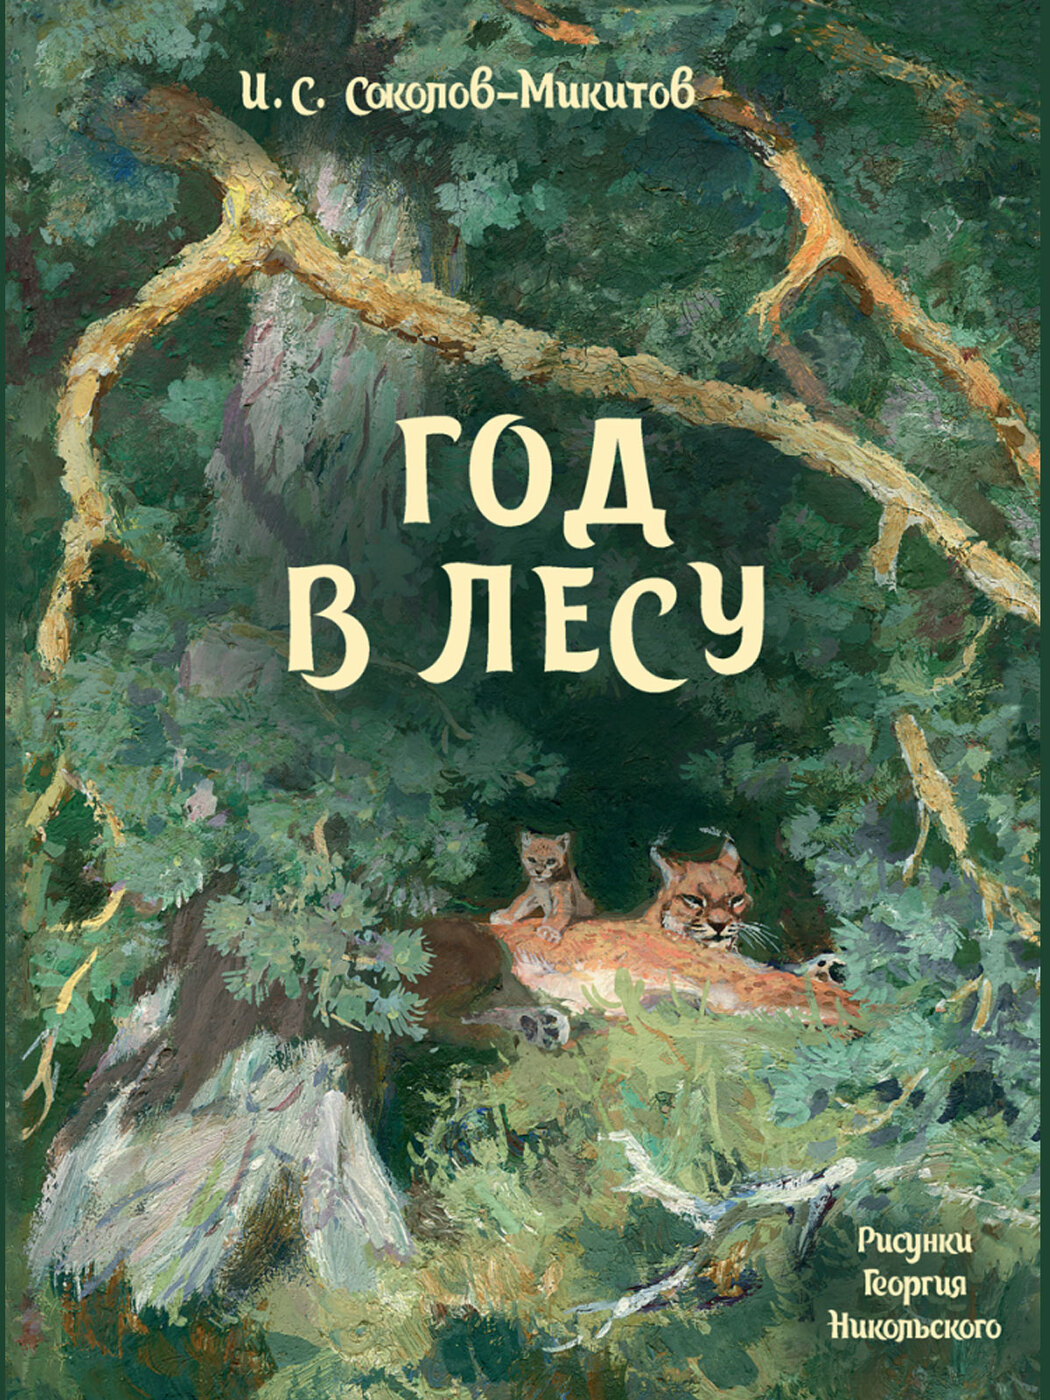 Книга лес. Соколов Микитов год в лесу. Год в лесу книга Соколов Микитов. Соколов Микитов год в лесу обложка.